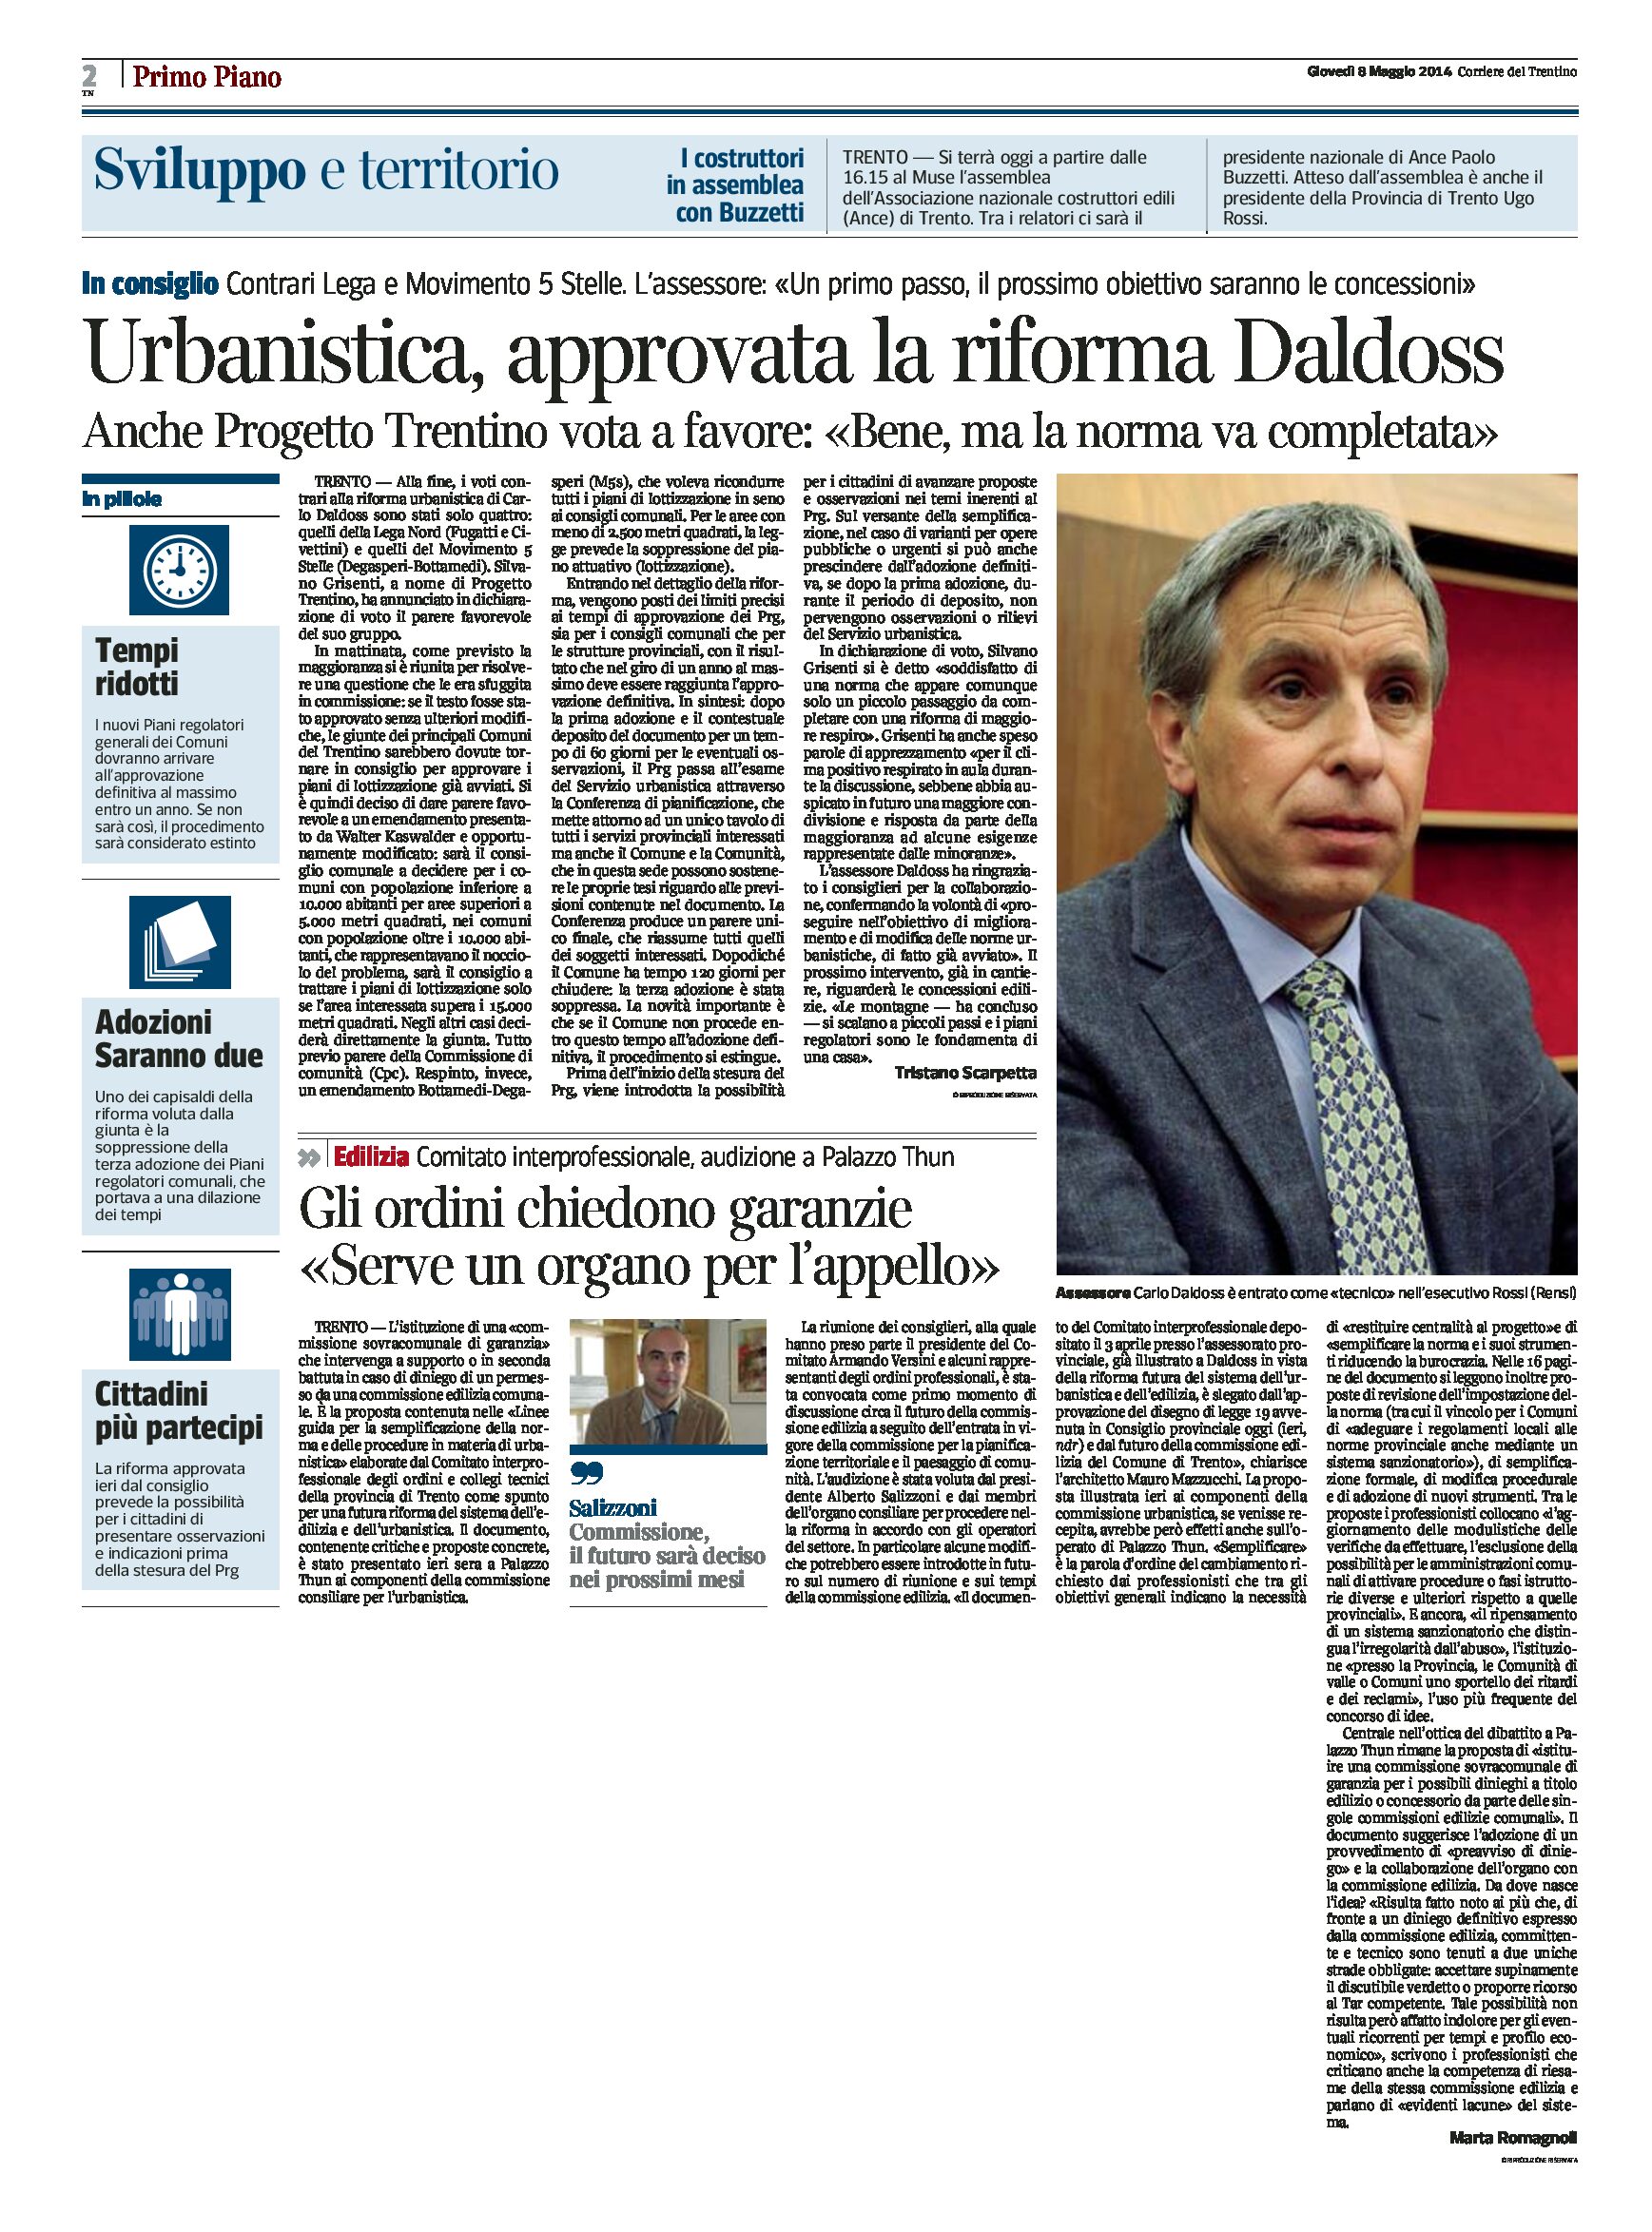 Trento: urbanistica, approvata la riforma Daldoss